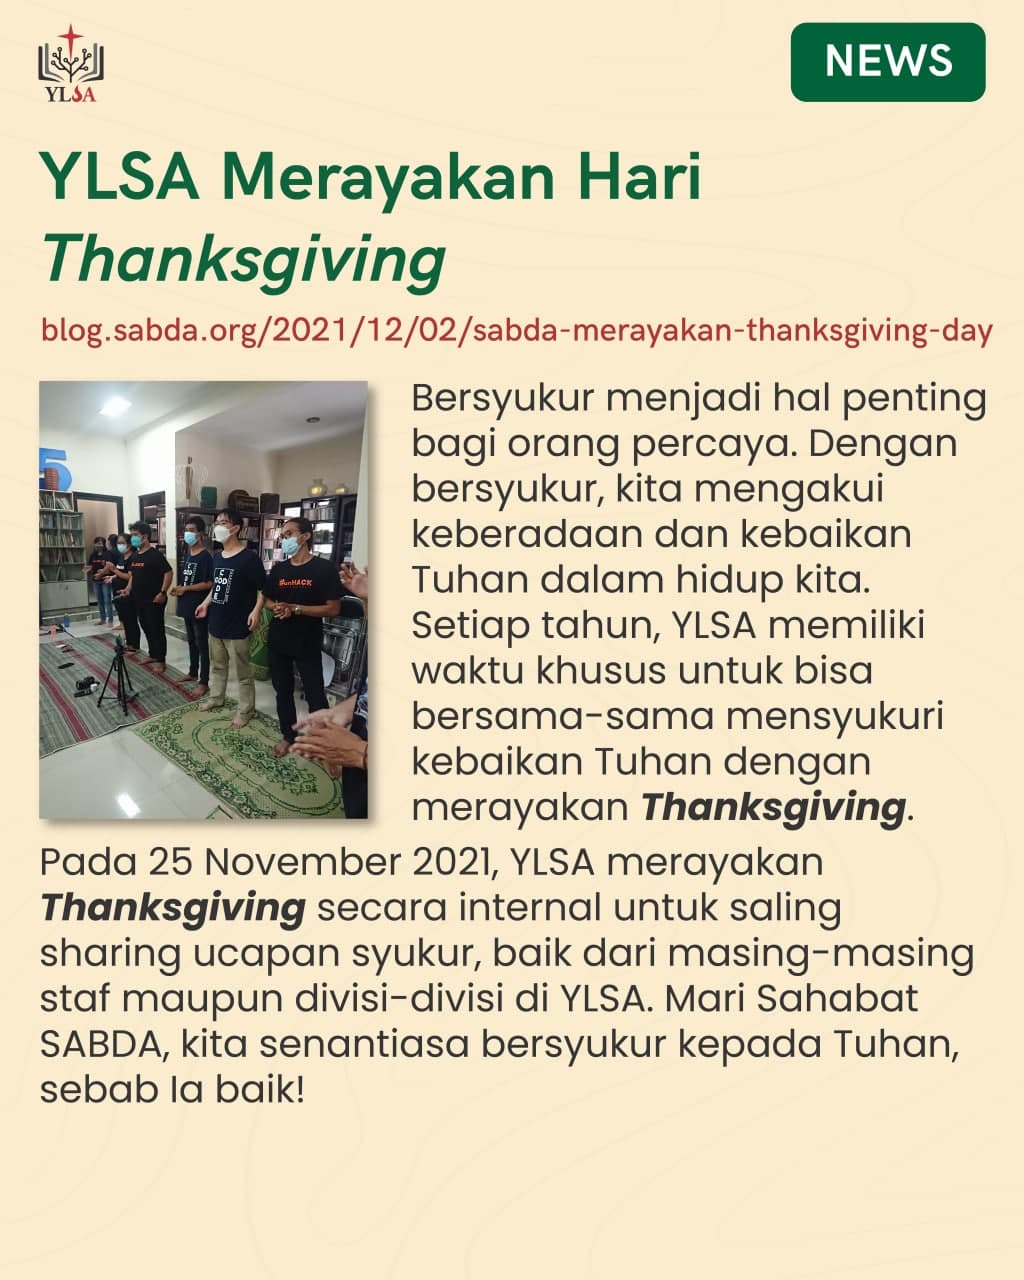 YLSA merayakan Thanksgiving secara internal untuk saling sharing ucapan syukur.